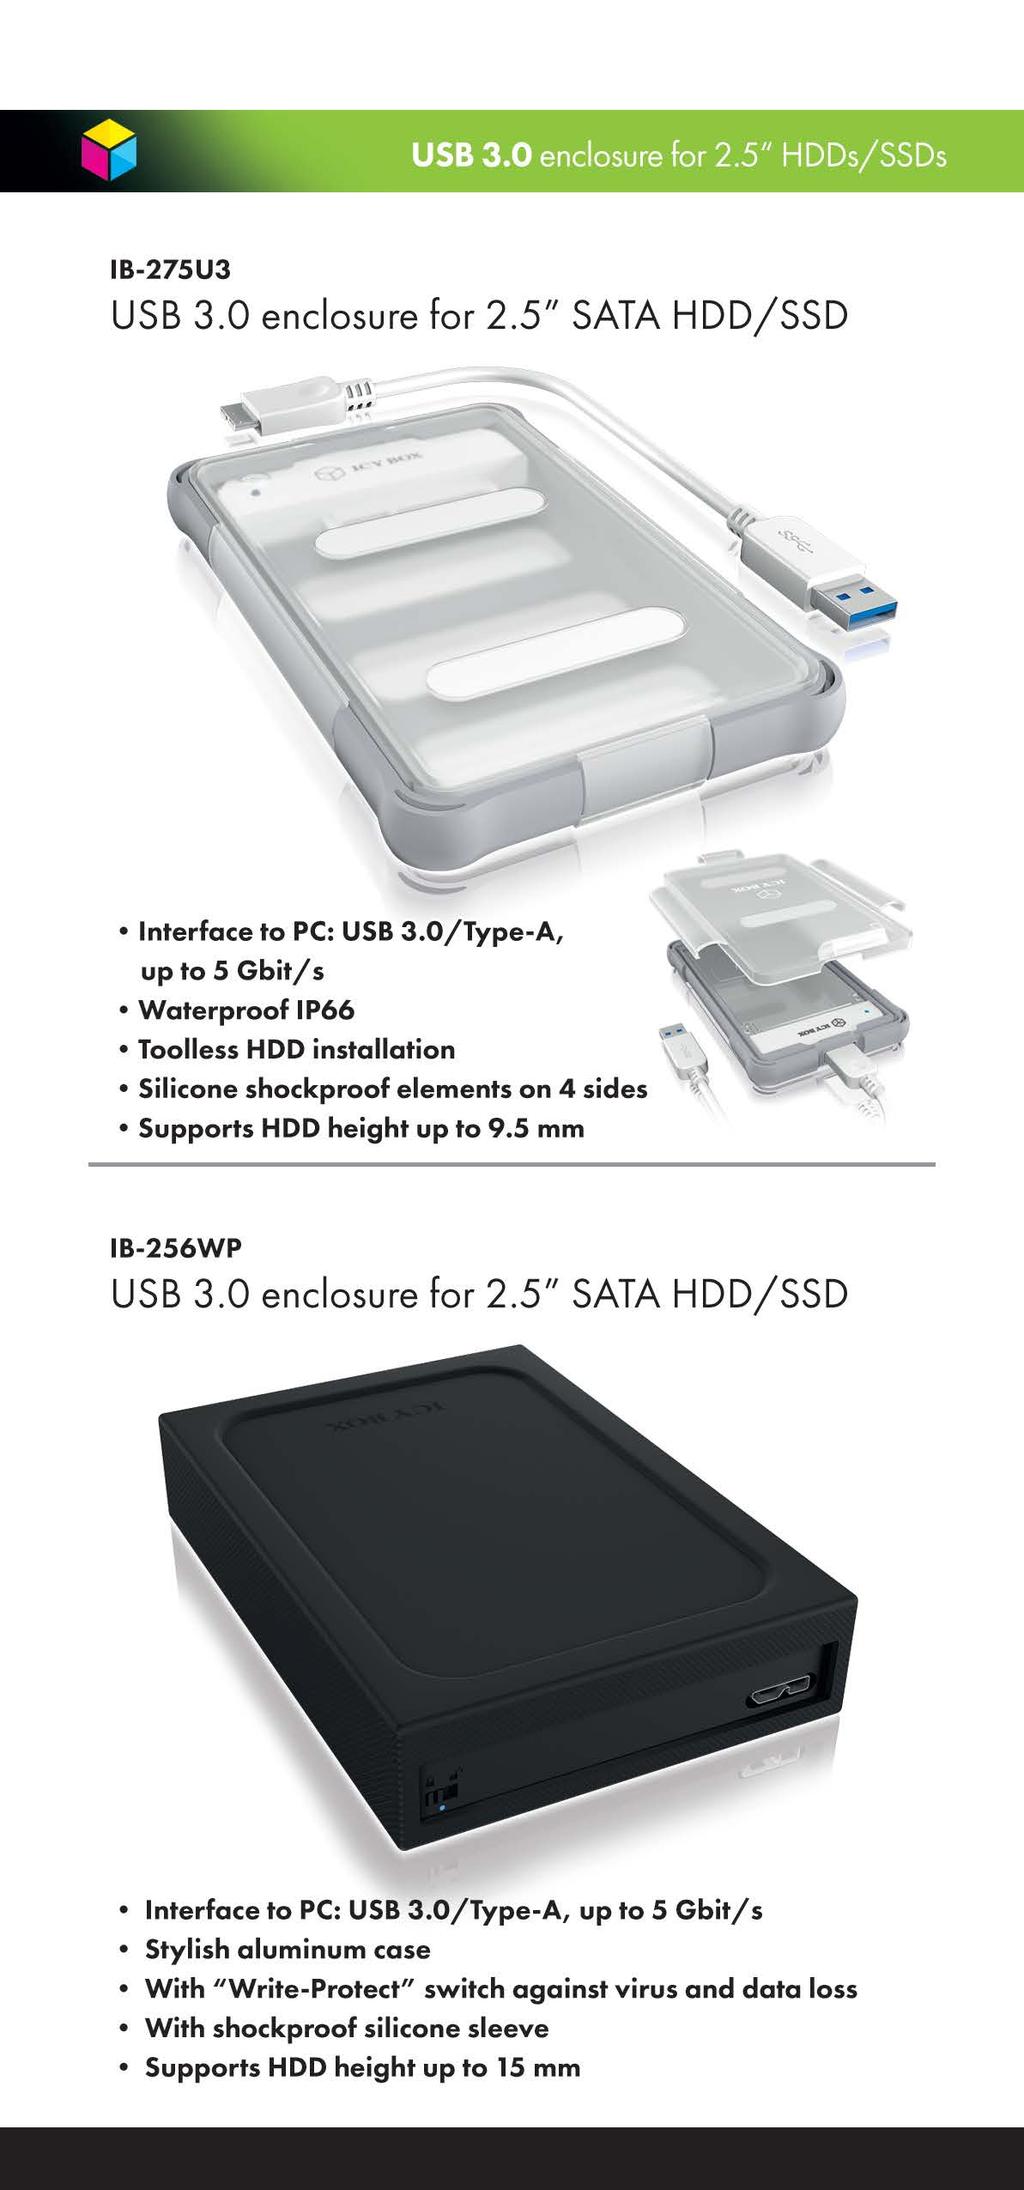 1B-275U3 USB 3.0 enclosure for 2.5" SATA HDD/SSD Interface to PC: USB 3.